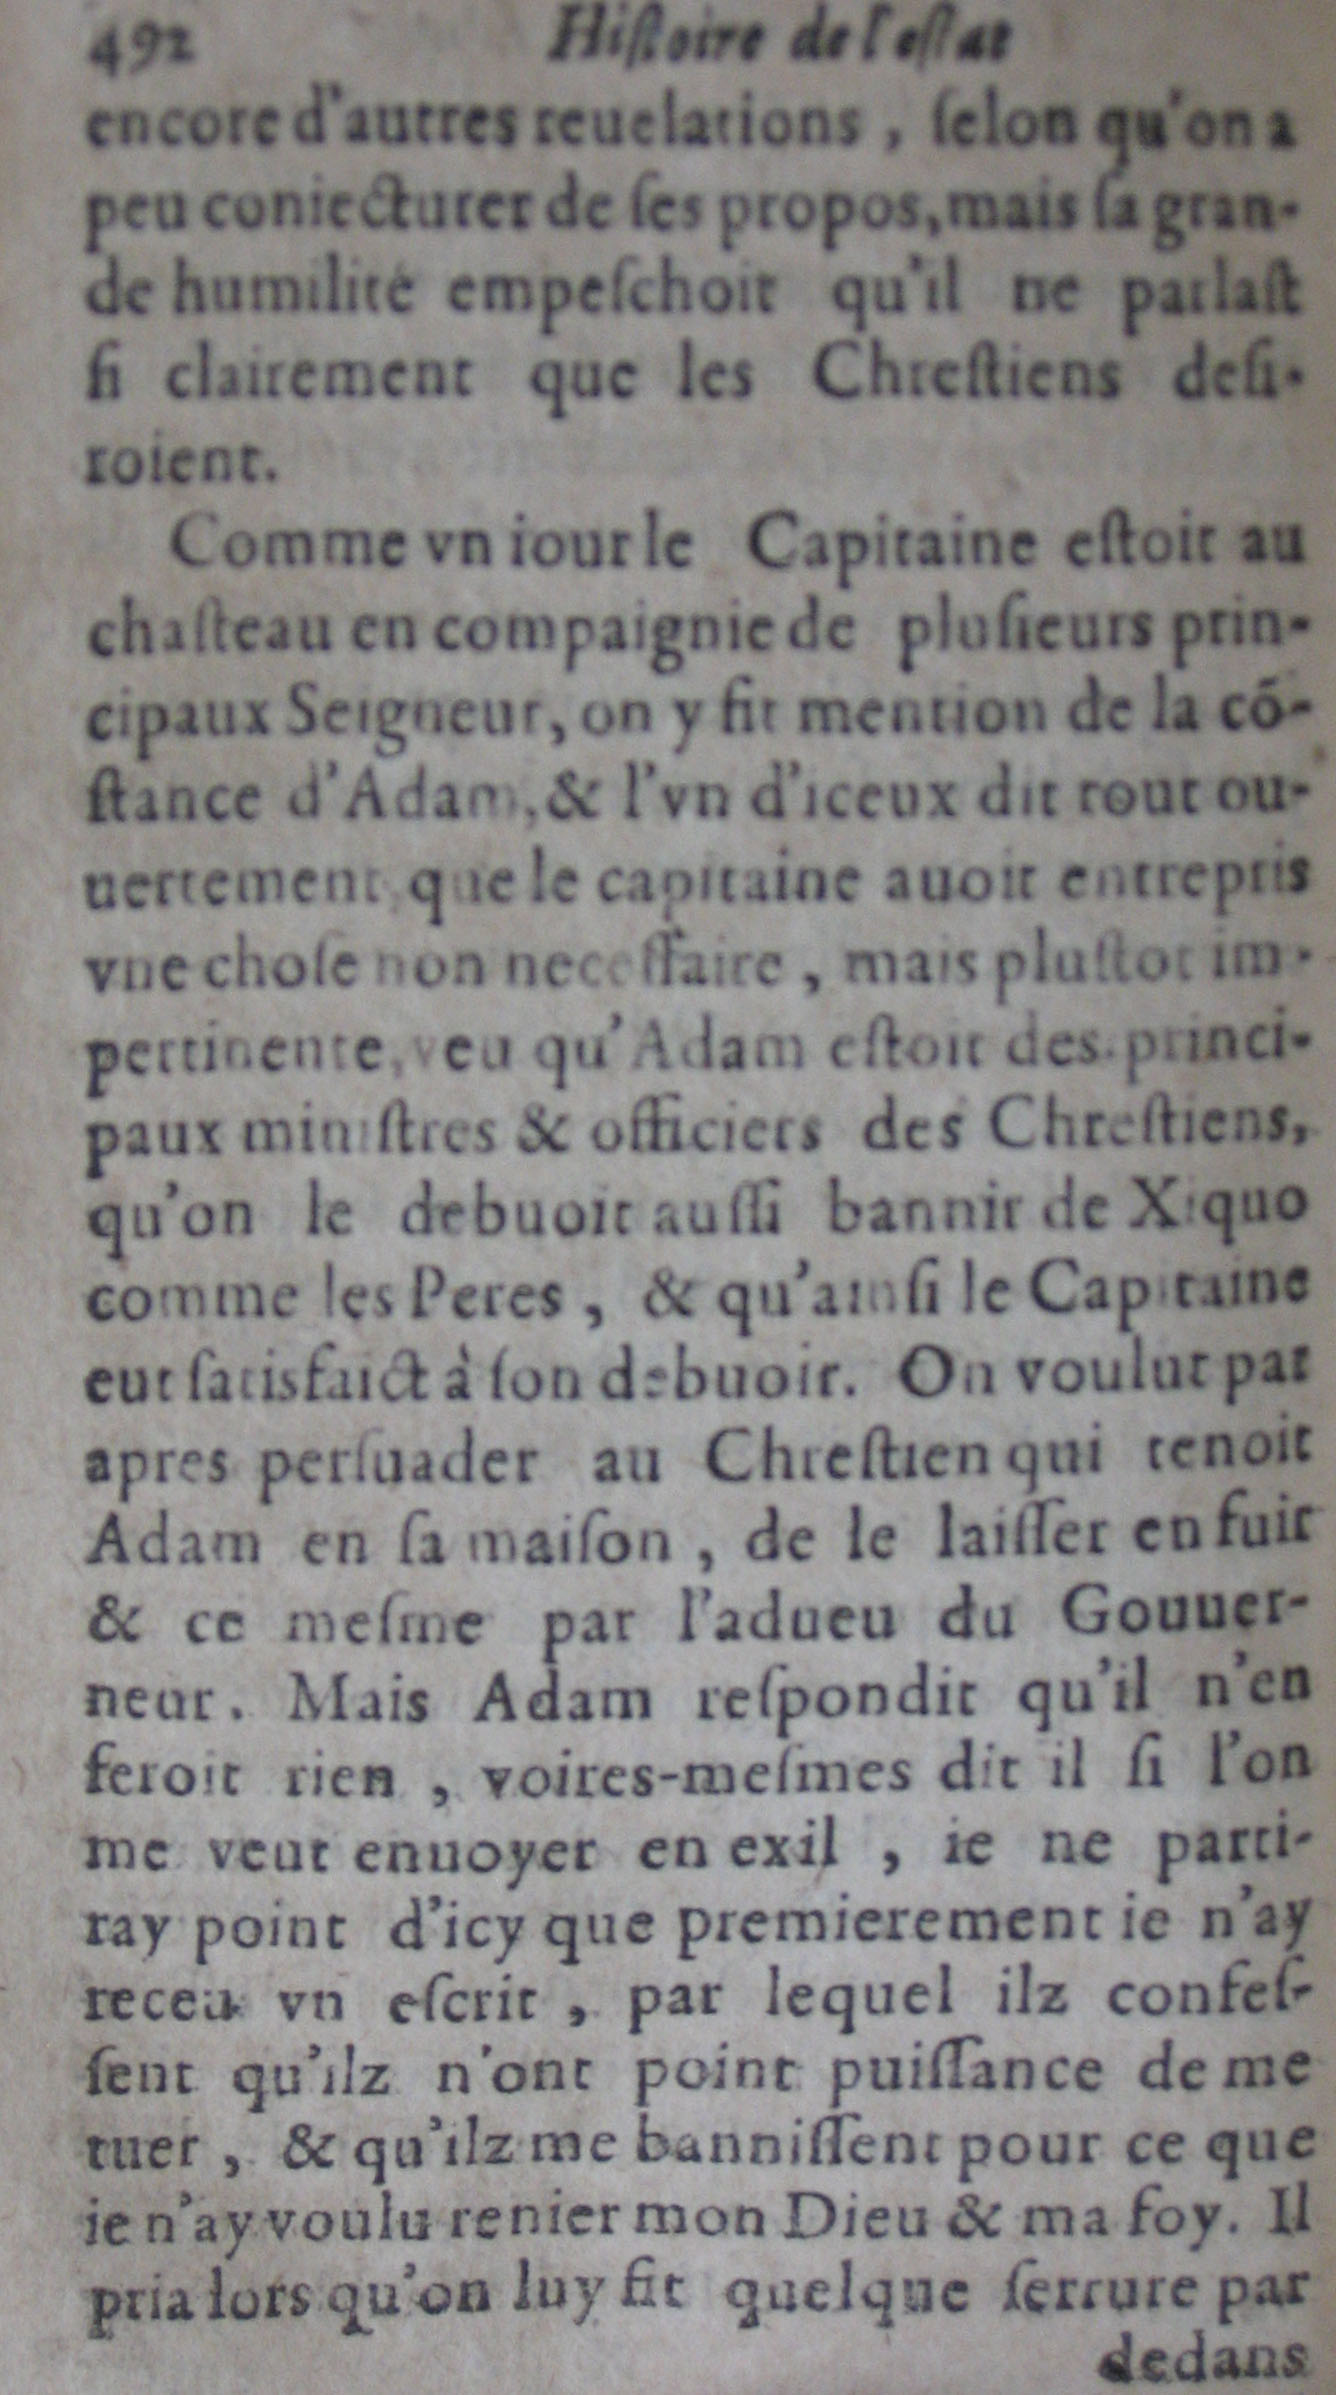 p. 492.JPG